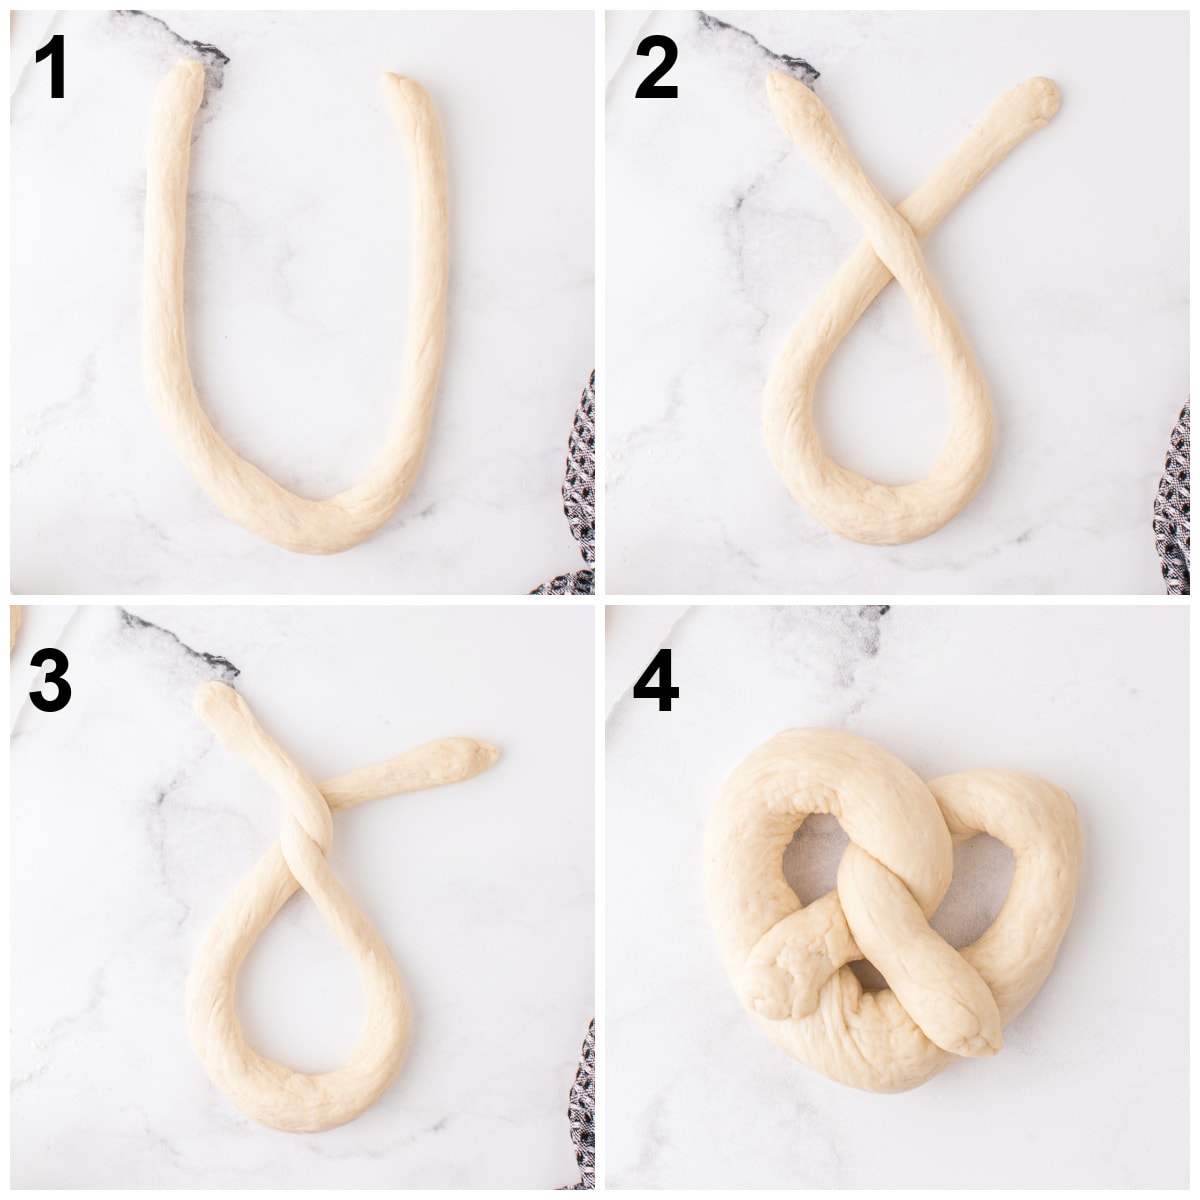 shaping dough into pretzel